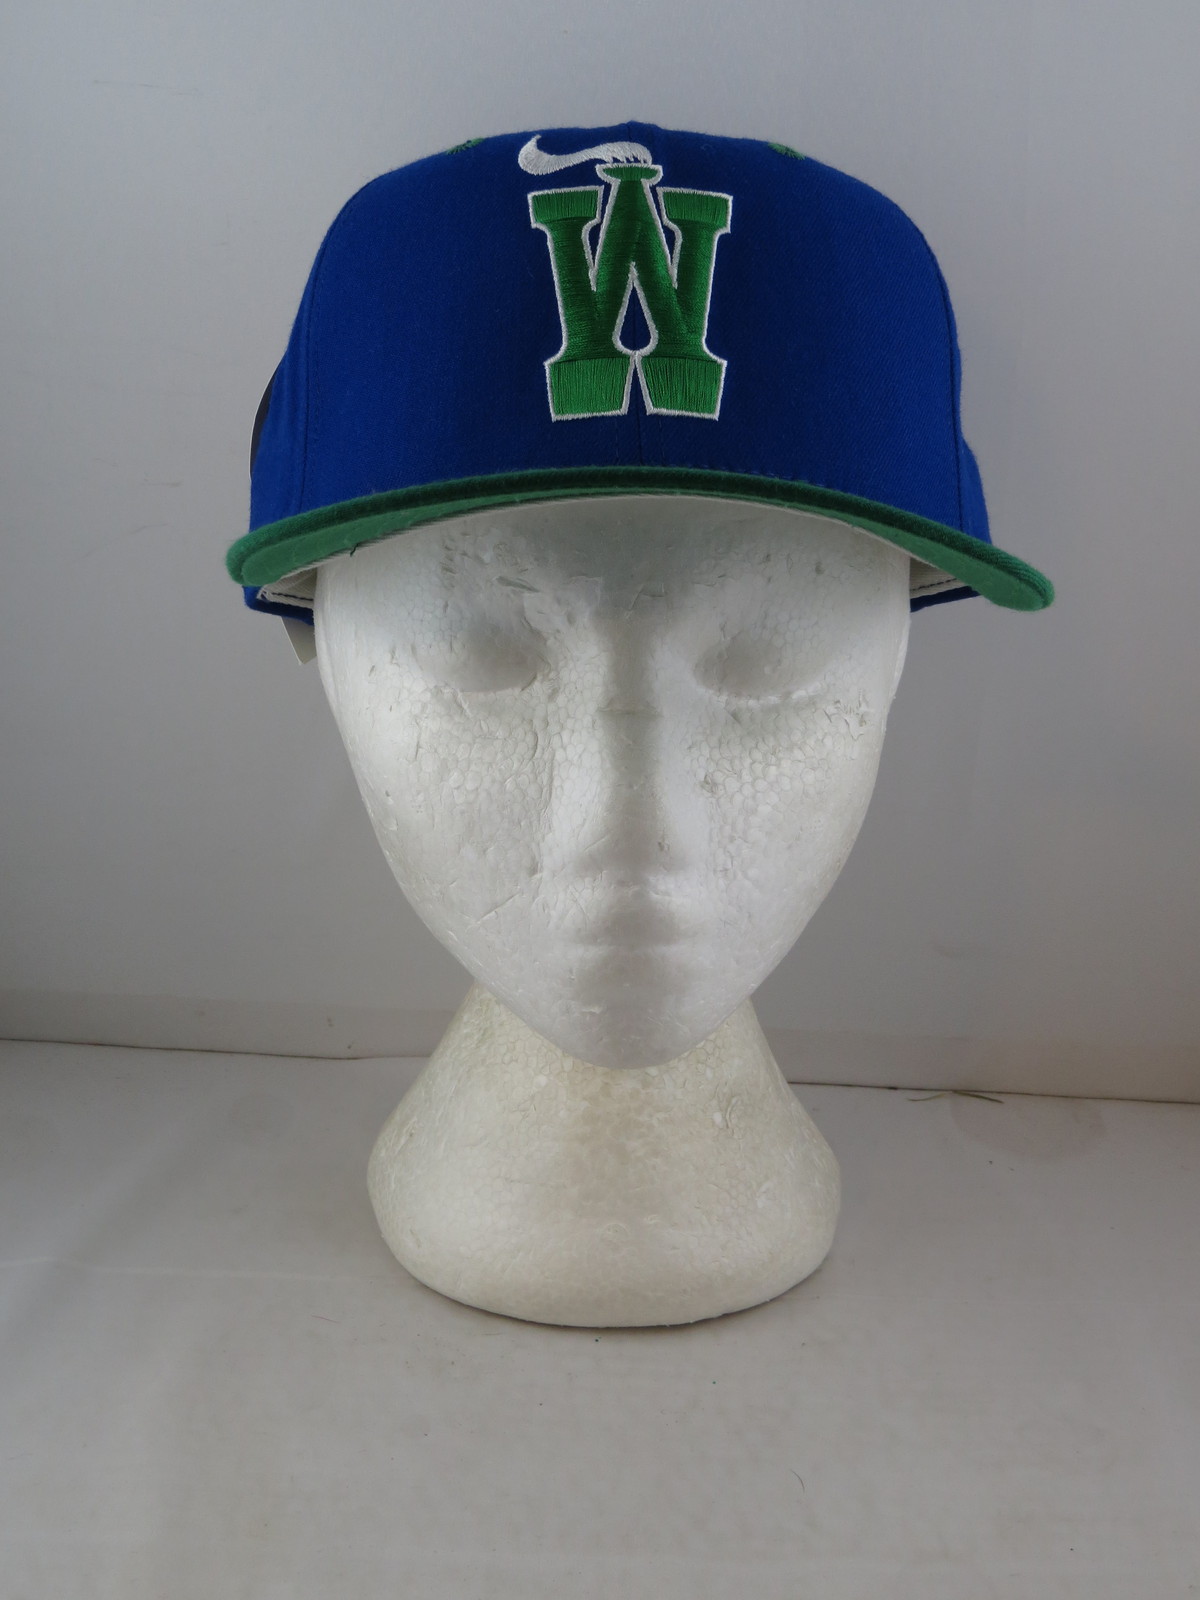 MLB Texas Rangers New Era Pro Model Hat NWT - Vintage Snapback